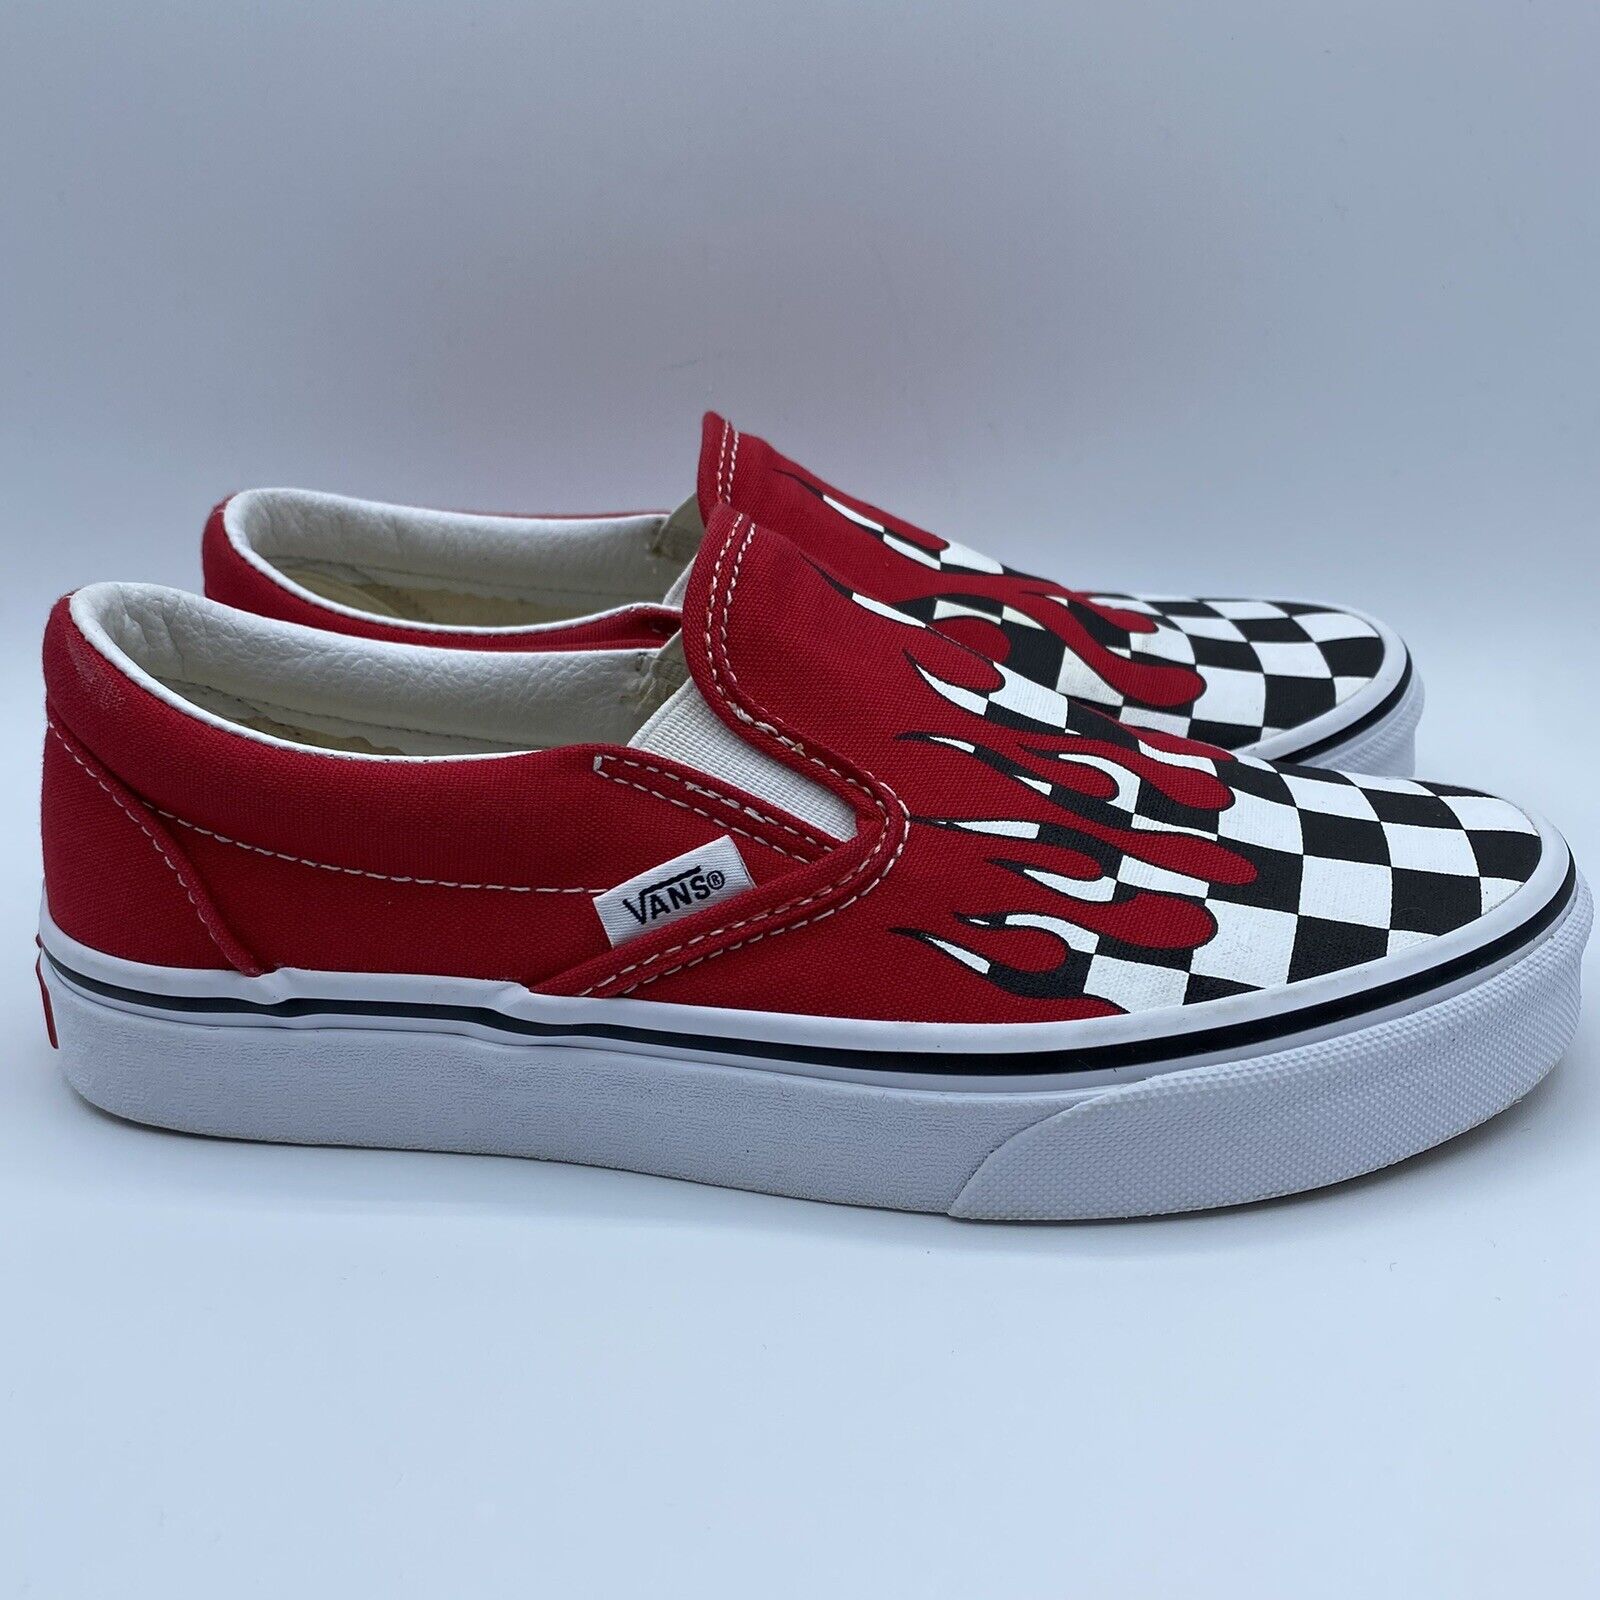 Vans Classic Slip-On Skate Shoes Max 41% OFF Women's Size Alternative dealer Flames Checkered 6 Red Black White